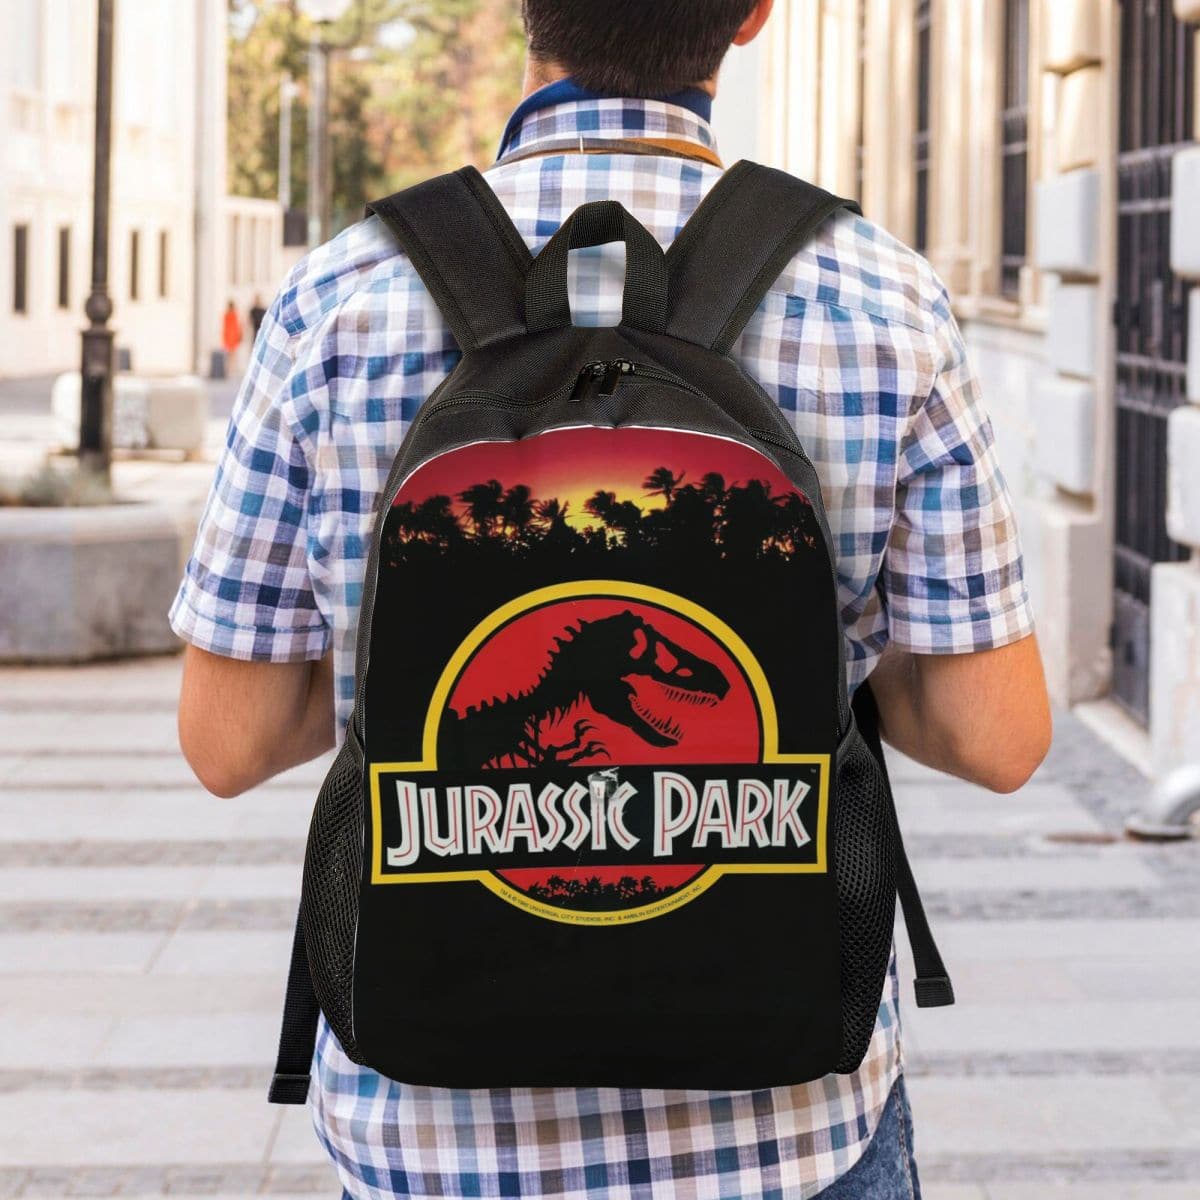 Jurassic Dinosaur Park Backpacks Sci Fi Fantasy Movie Film School College Travel Bags Men Women Bookbag Fits 15 Inch Laptop